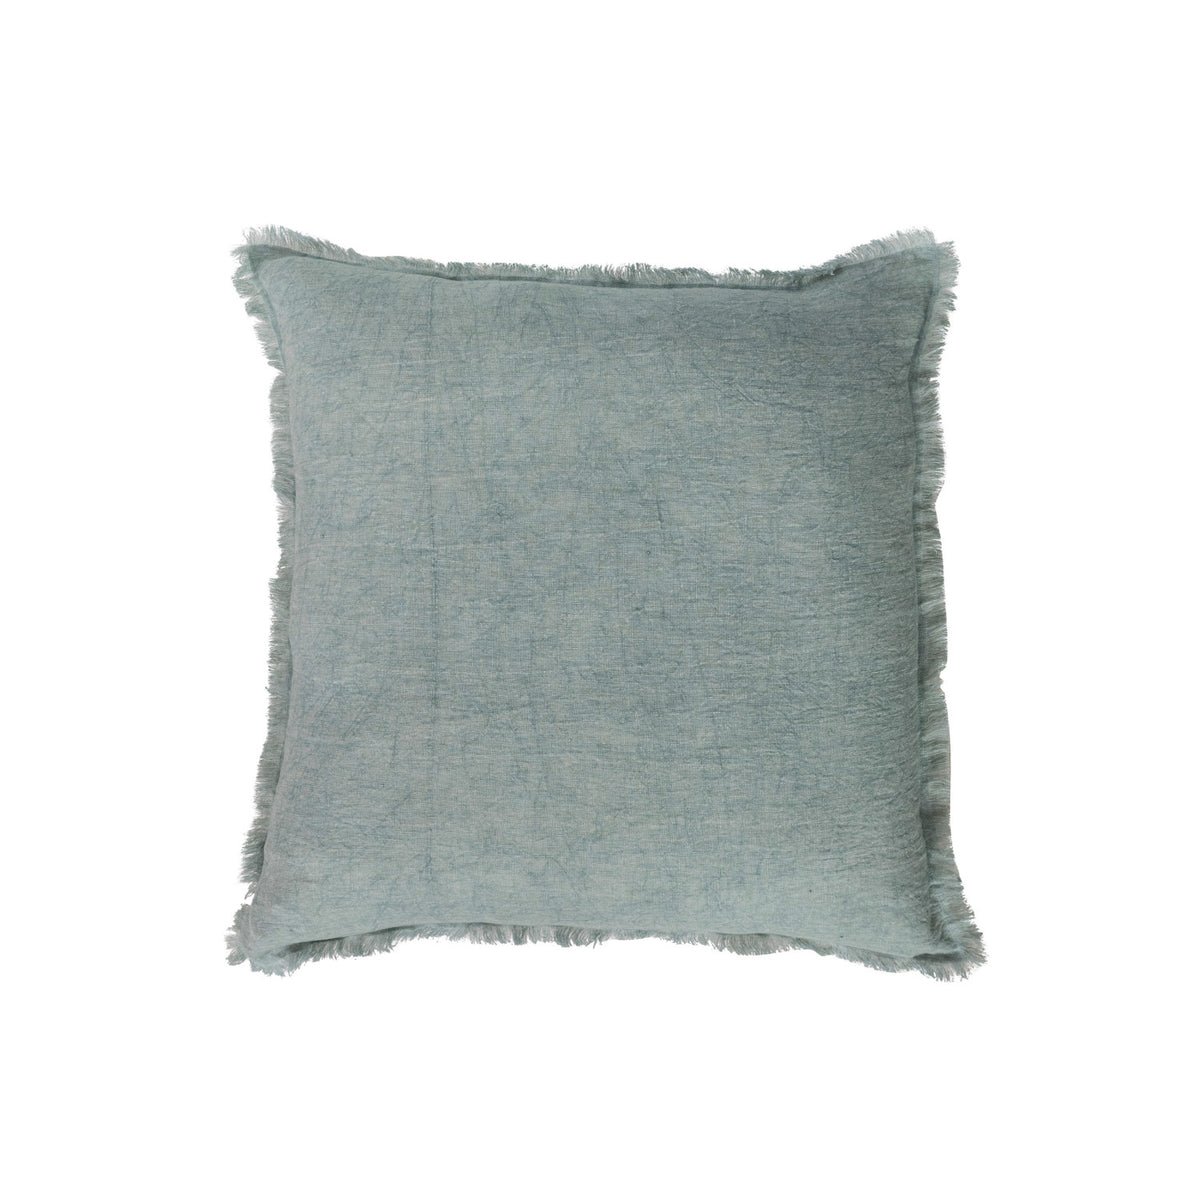 20" Square Stonewashed Linen Pillow w/Fringe